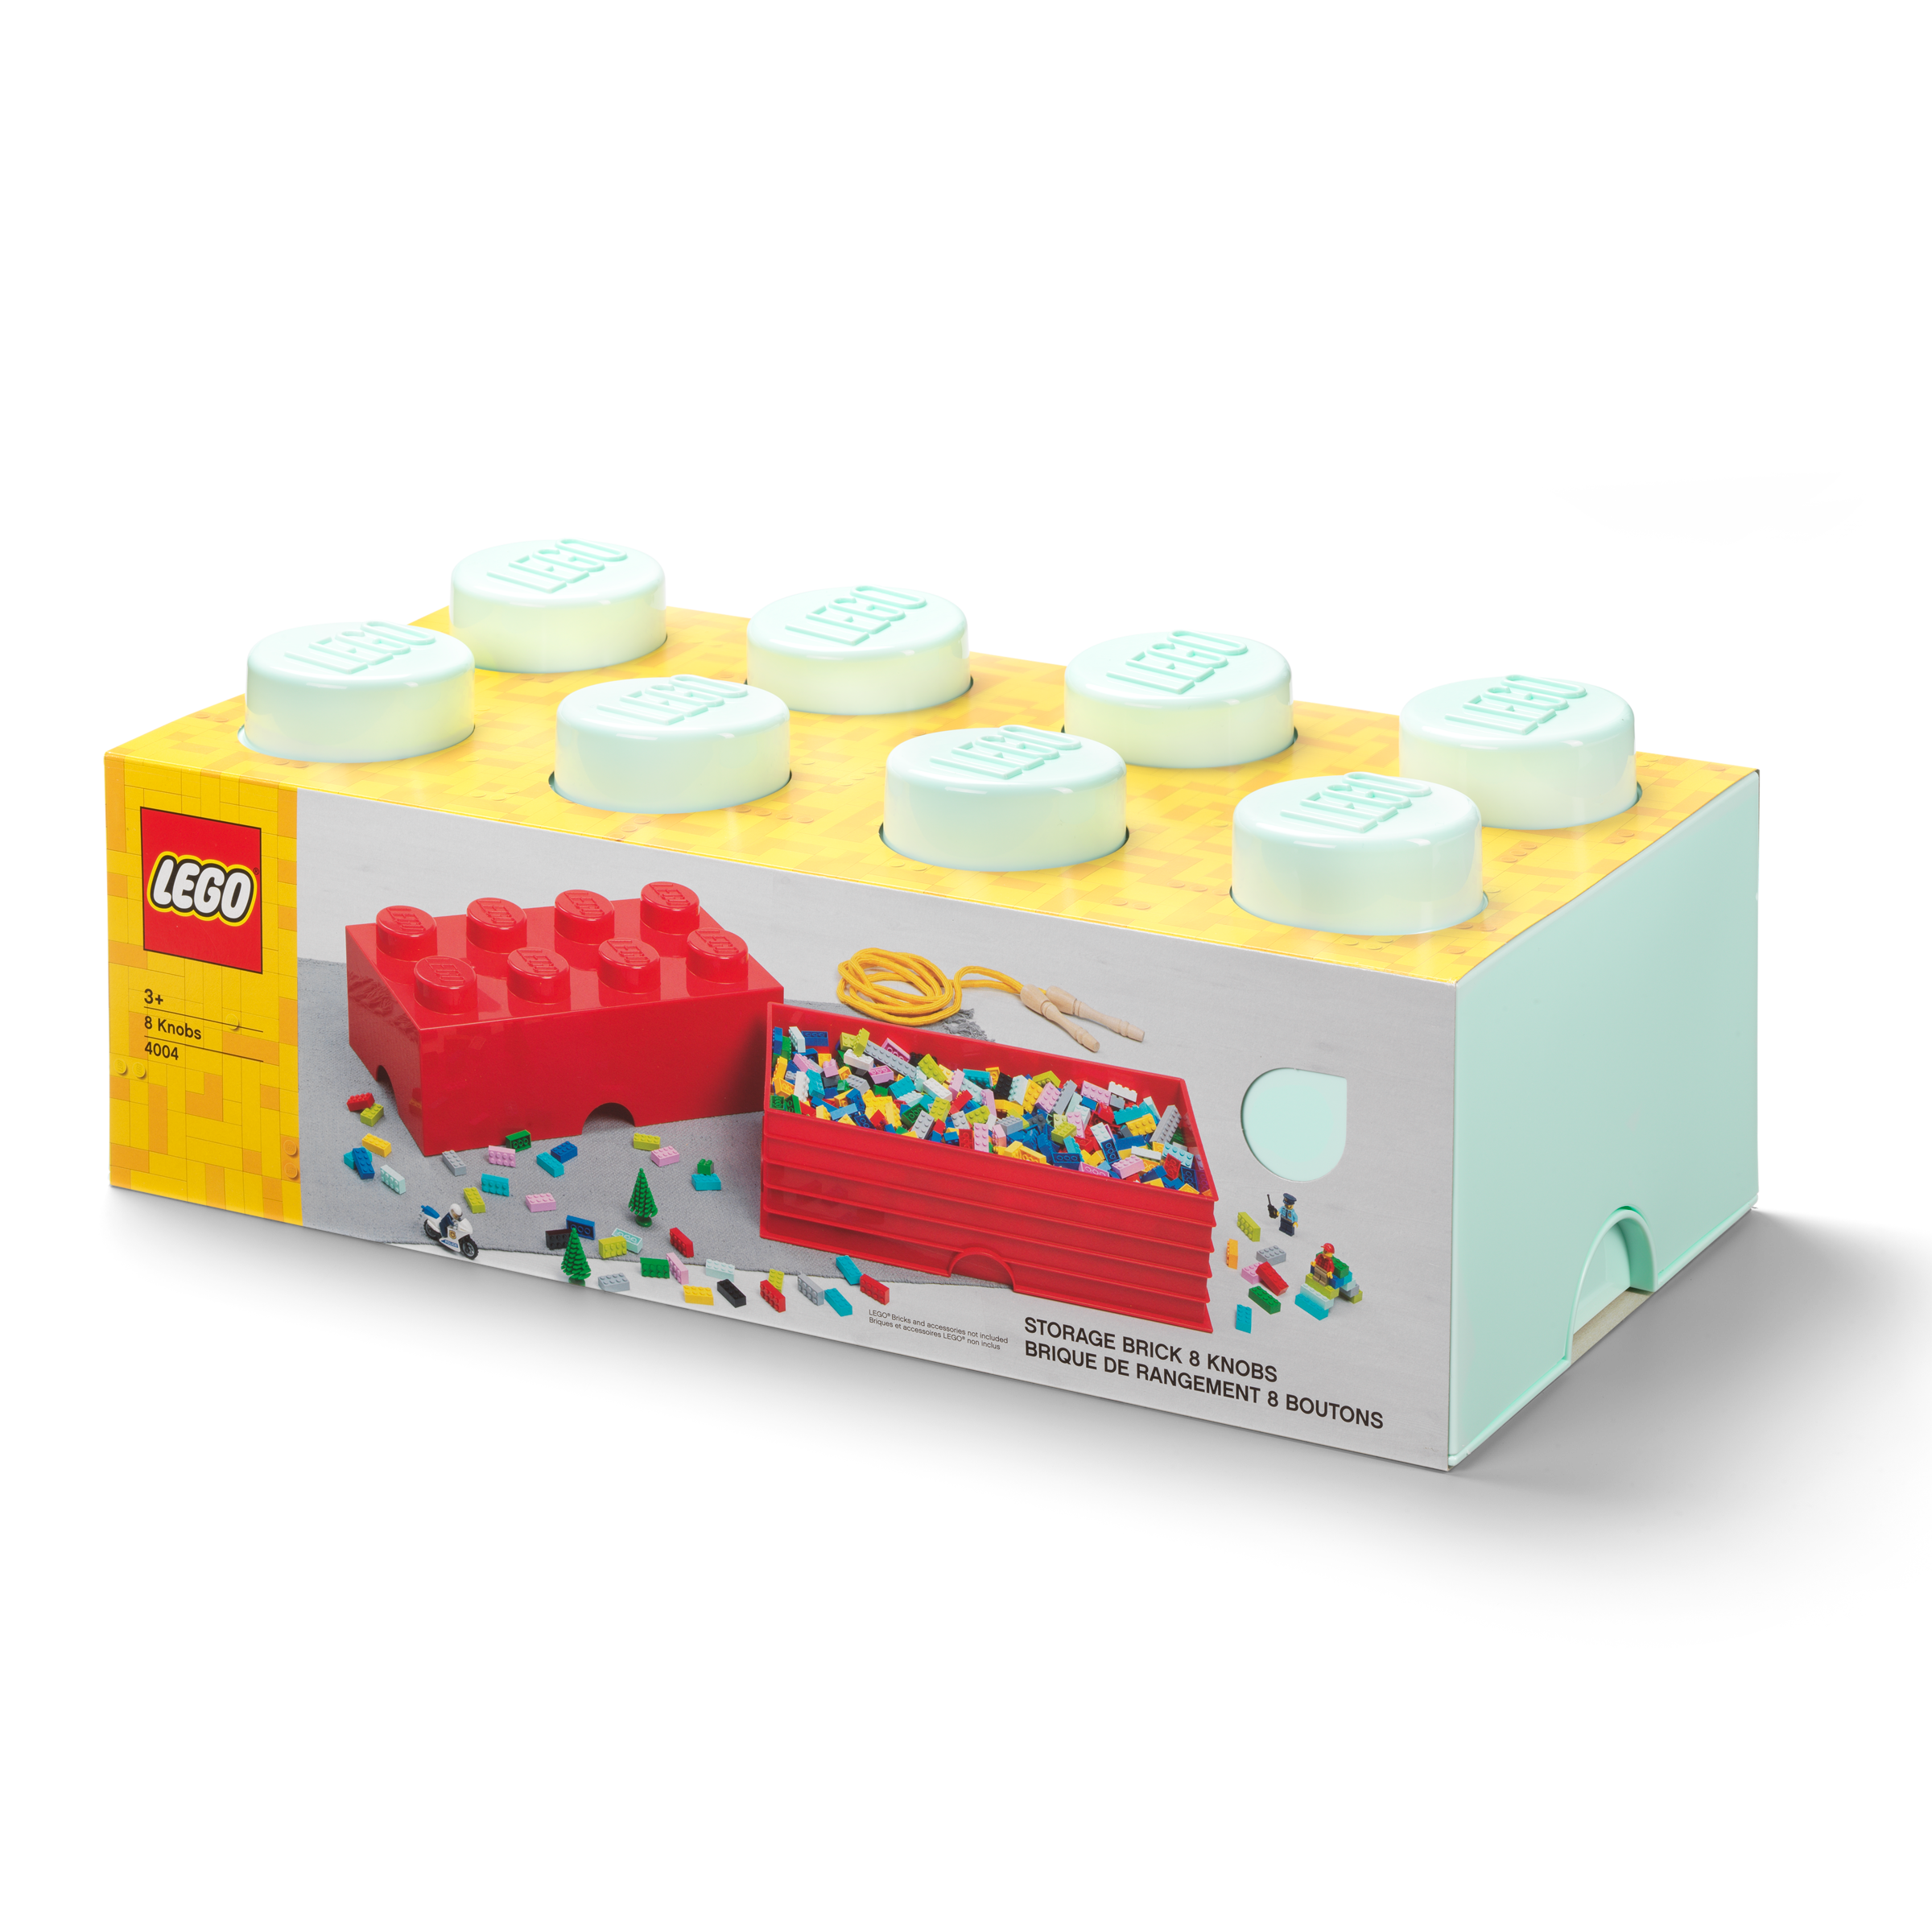 LEGO® 8-Stud Storage Brick – Aqua Blue